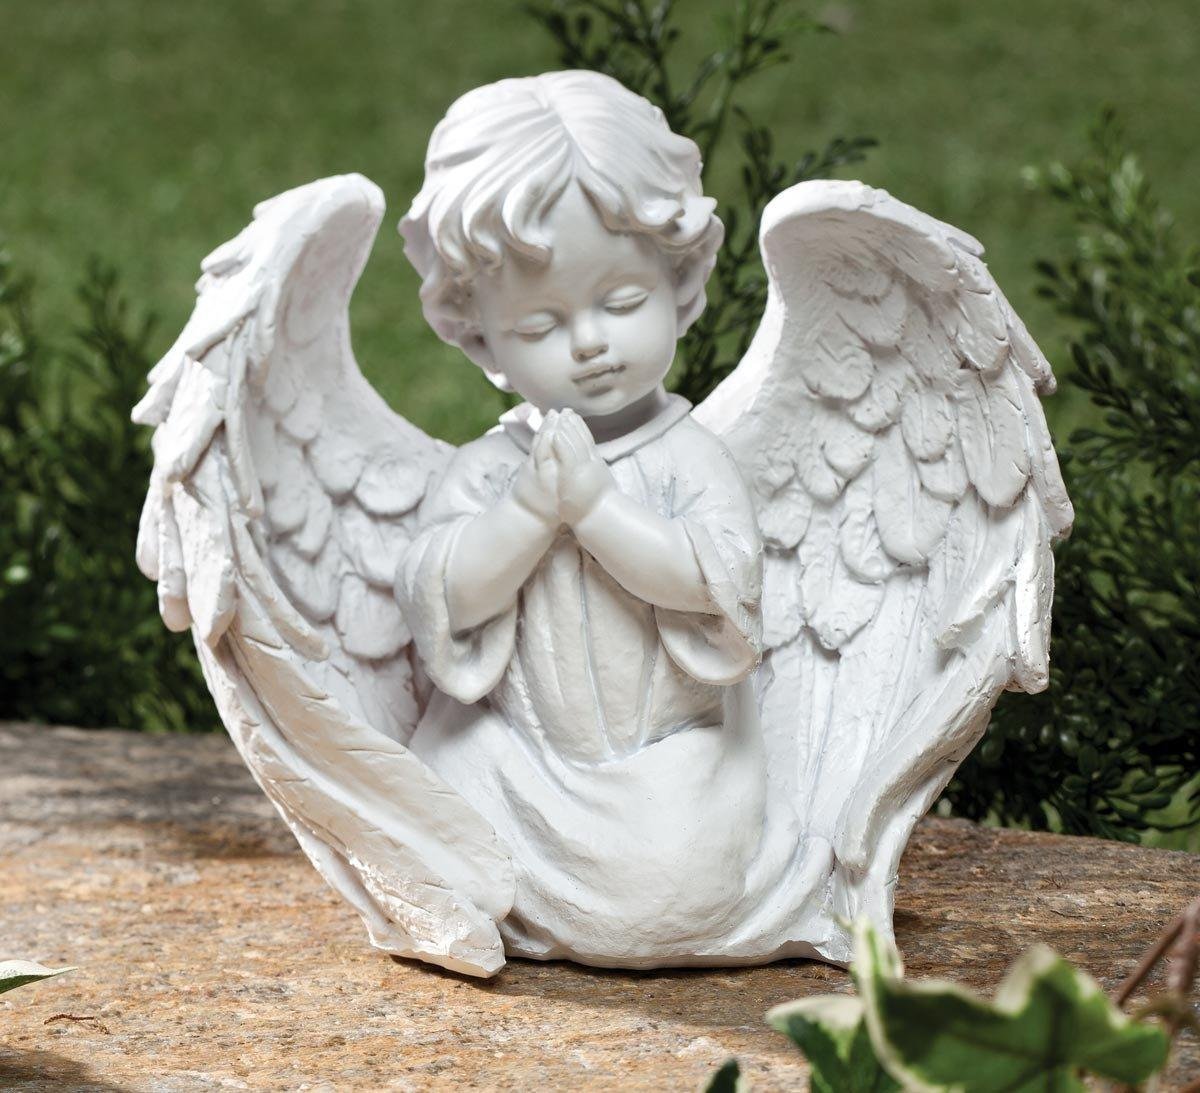 Hand-Carved Little Angel Sculpture for Garden Decoration